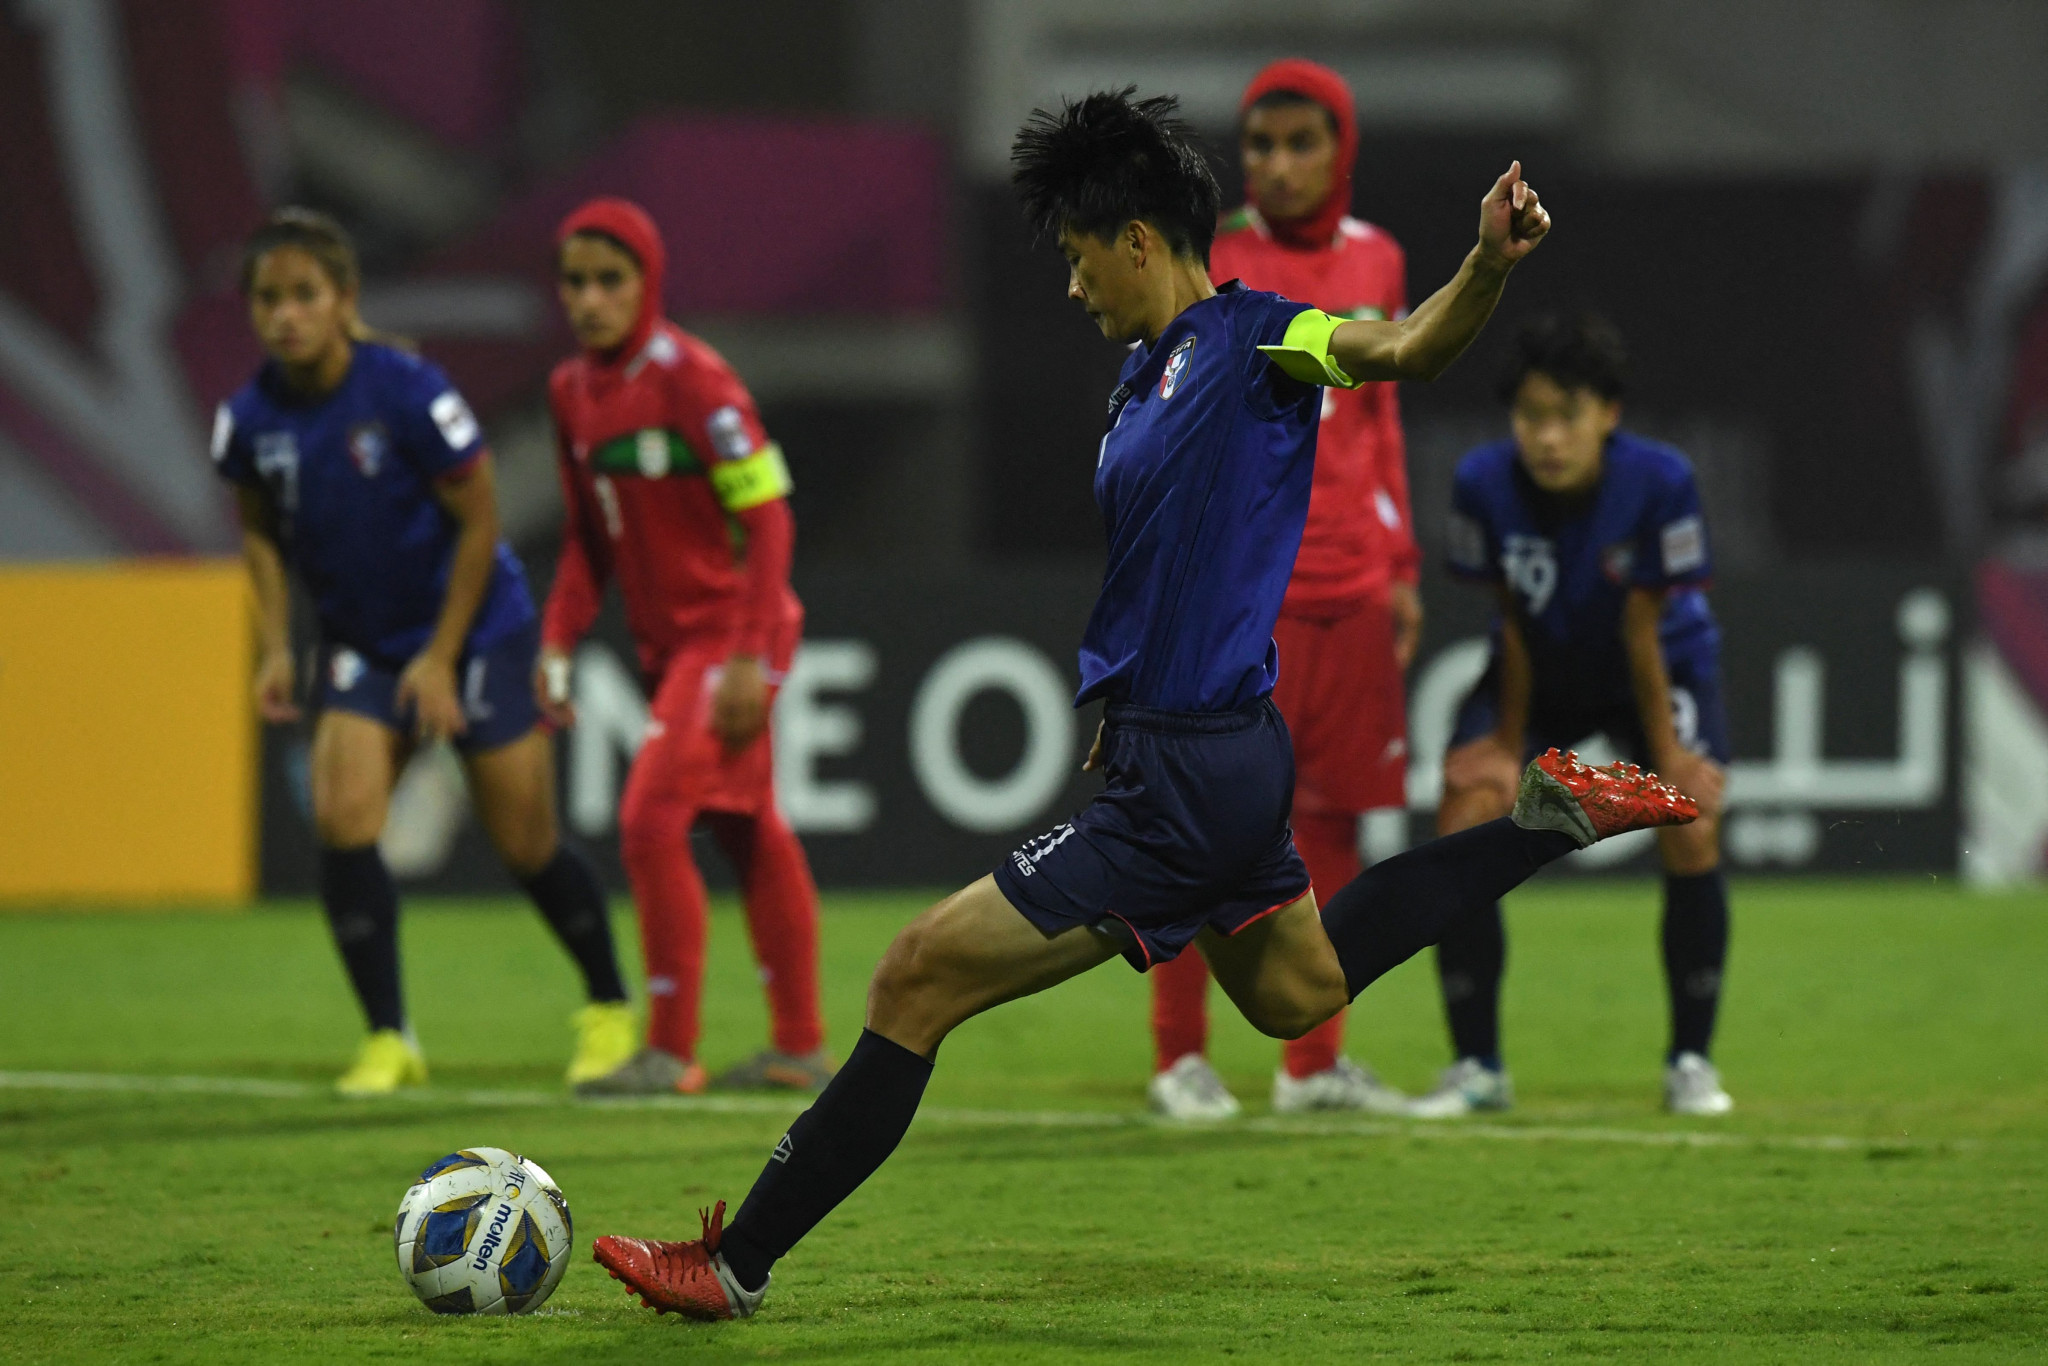 Lai Li-chin scored a hat-trick against Iran ©Getty Images